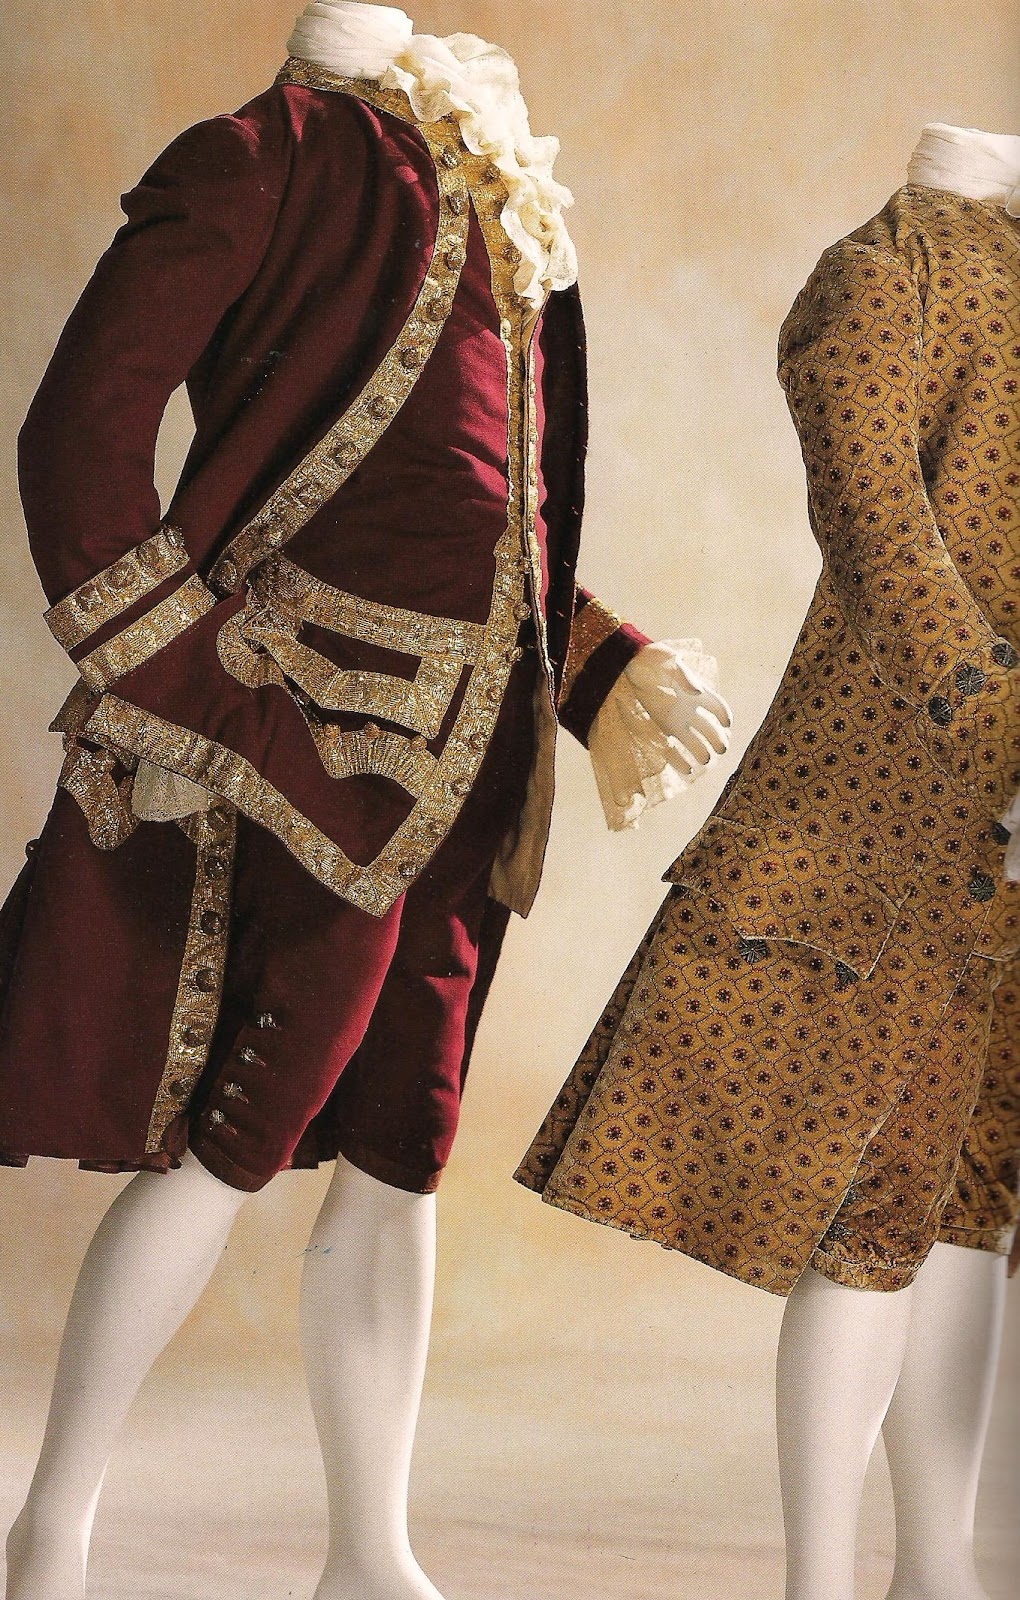 Devilinspired Rococo Clothing Men's Fashion in Rococo Style